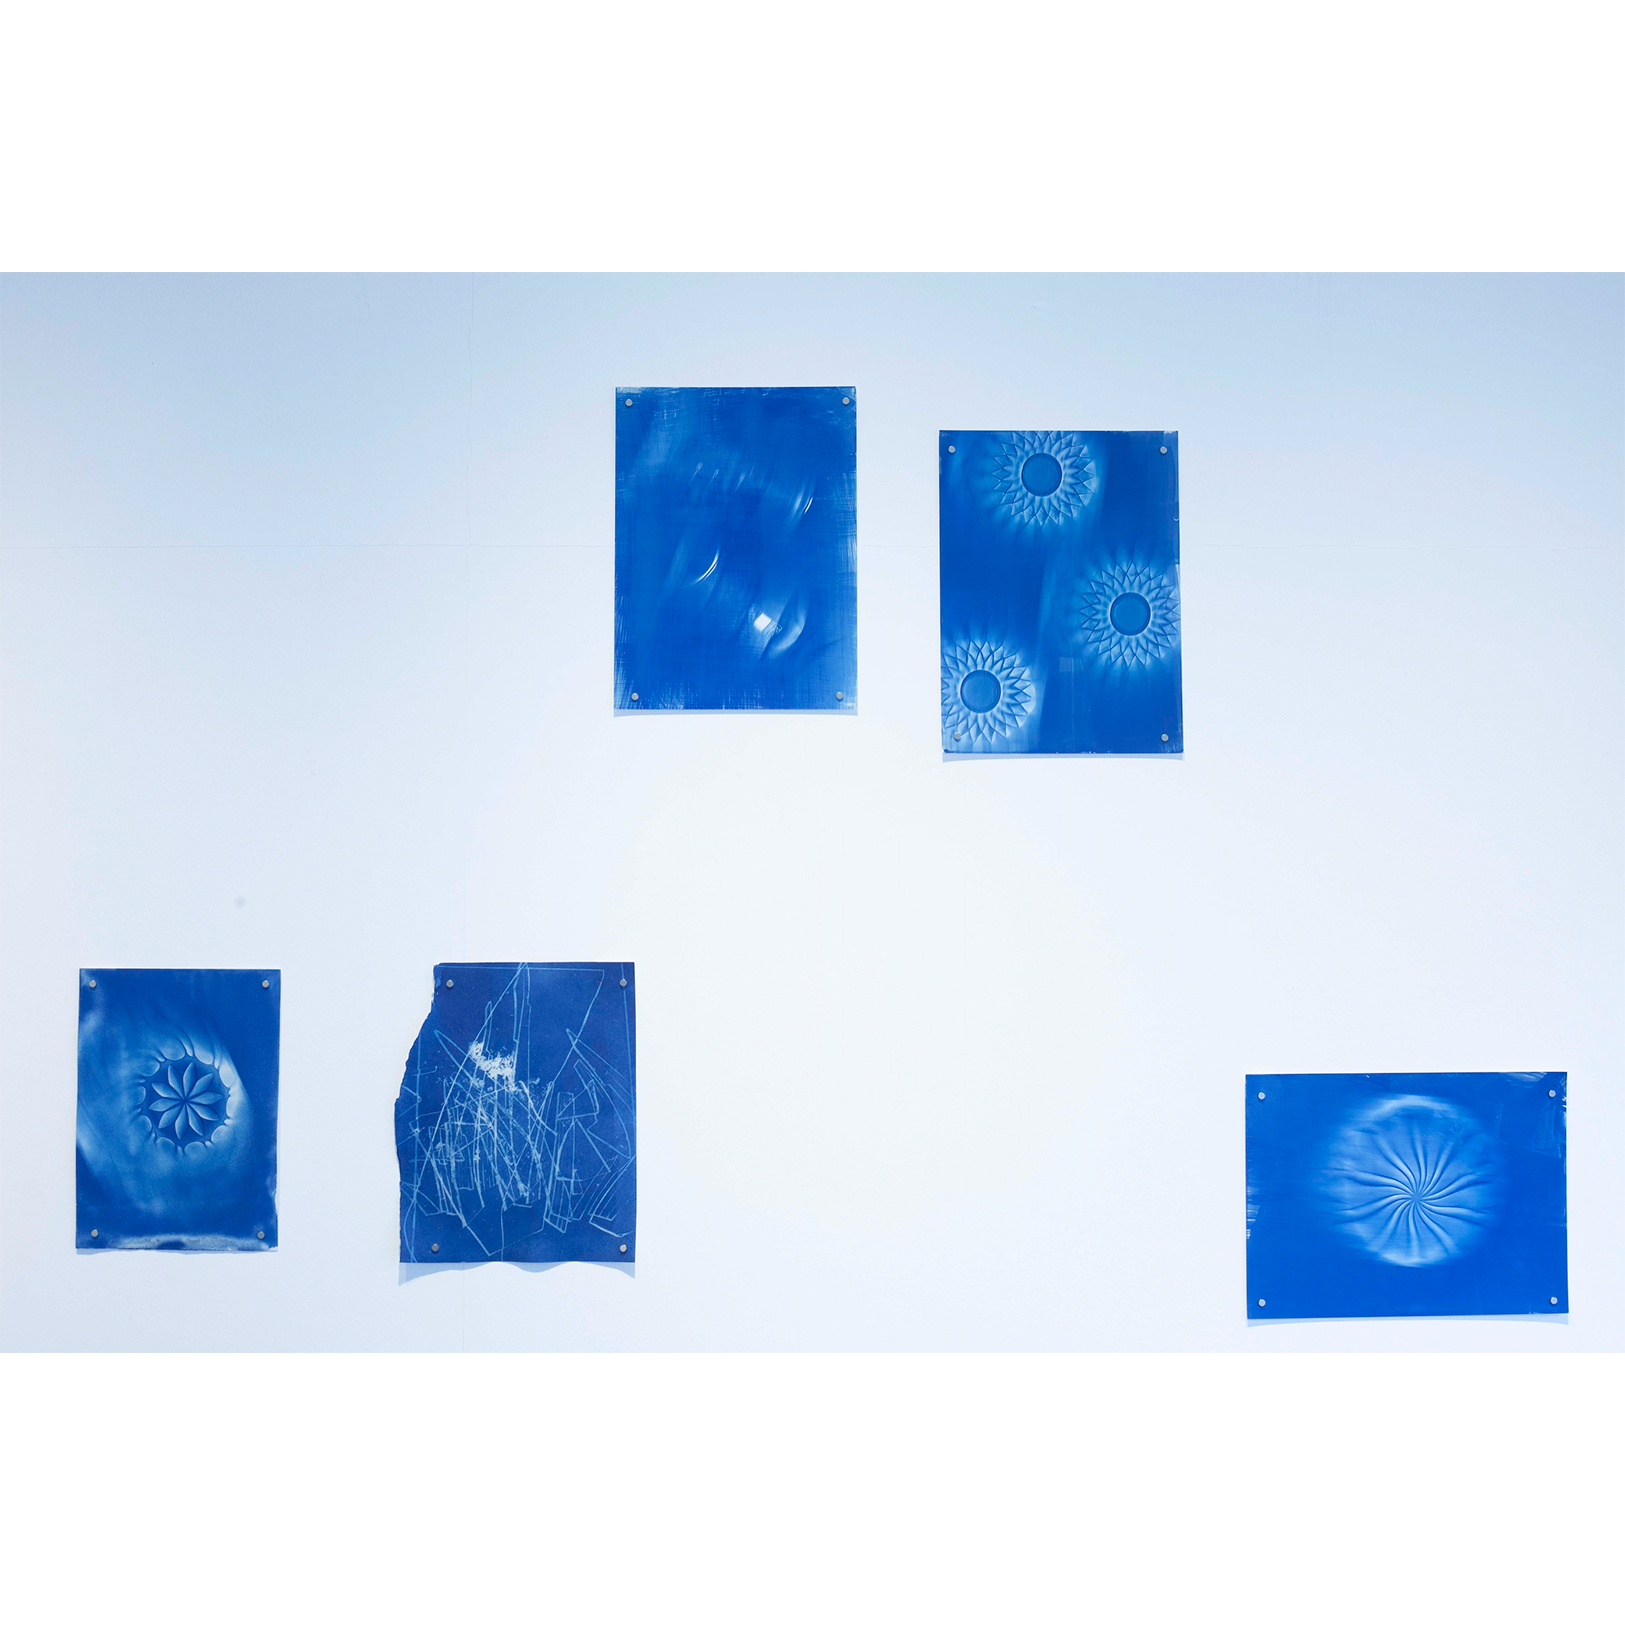 Jens Sundheim<br>《unique cyano type prints》009